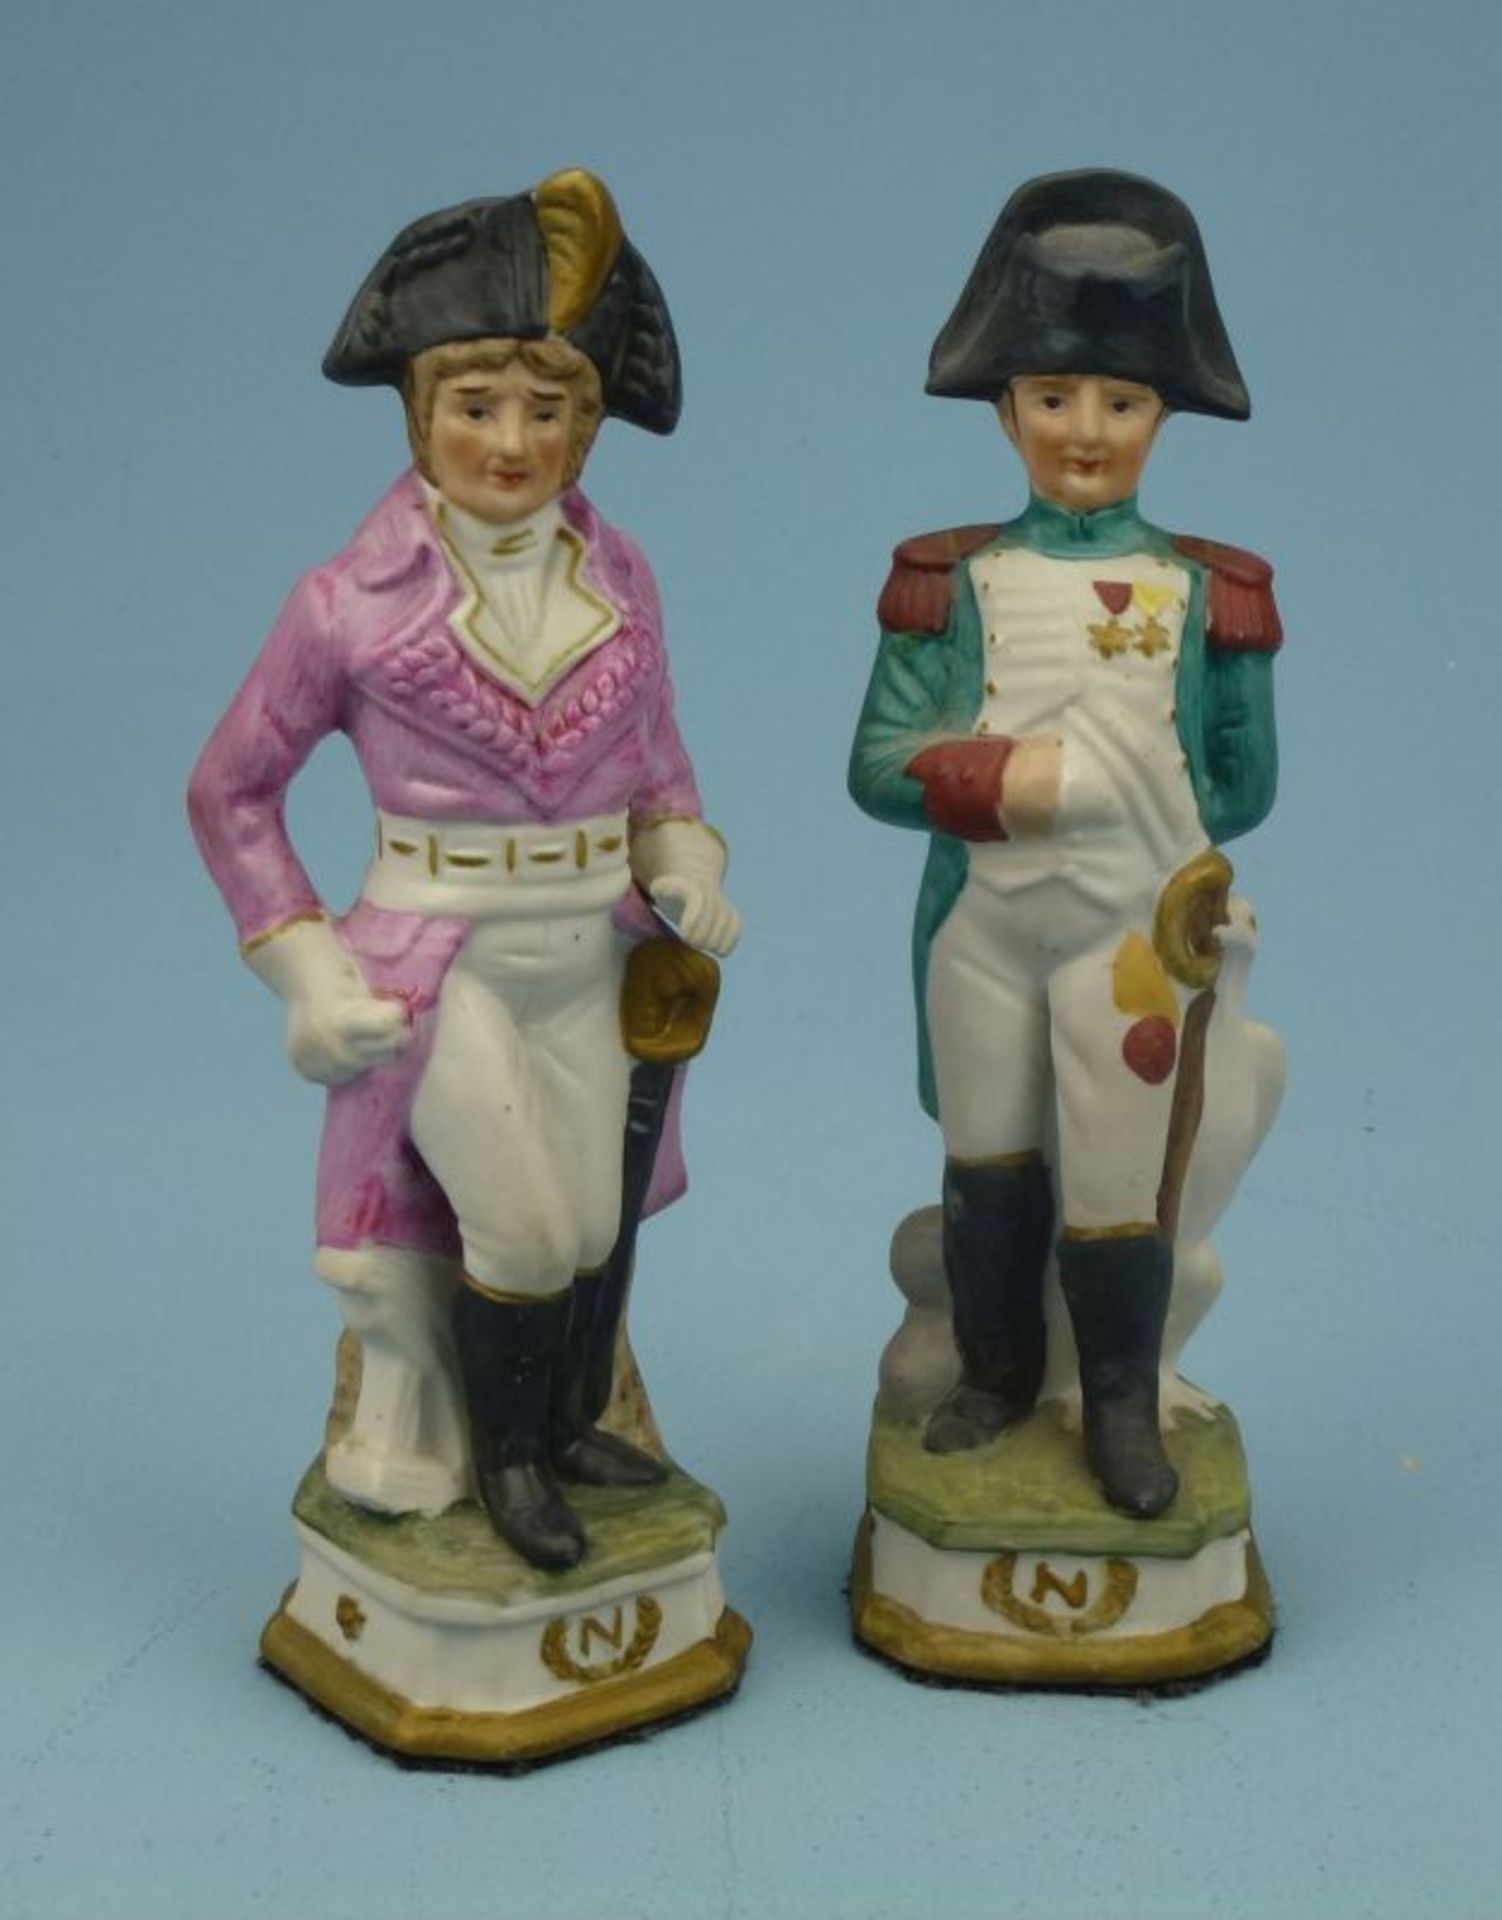 2 Napoleon-Figuren farb. dekoriert2 Napoleon-Figuren farb. dekoriertin Uniform, Sockel, H je 19 cm